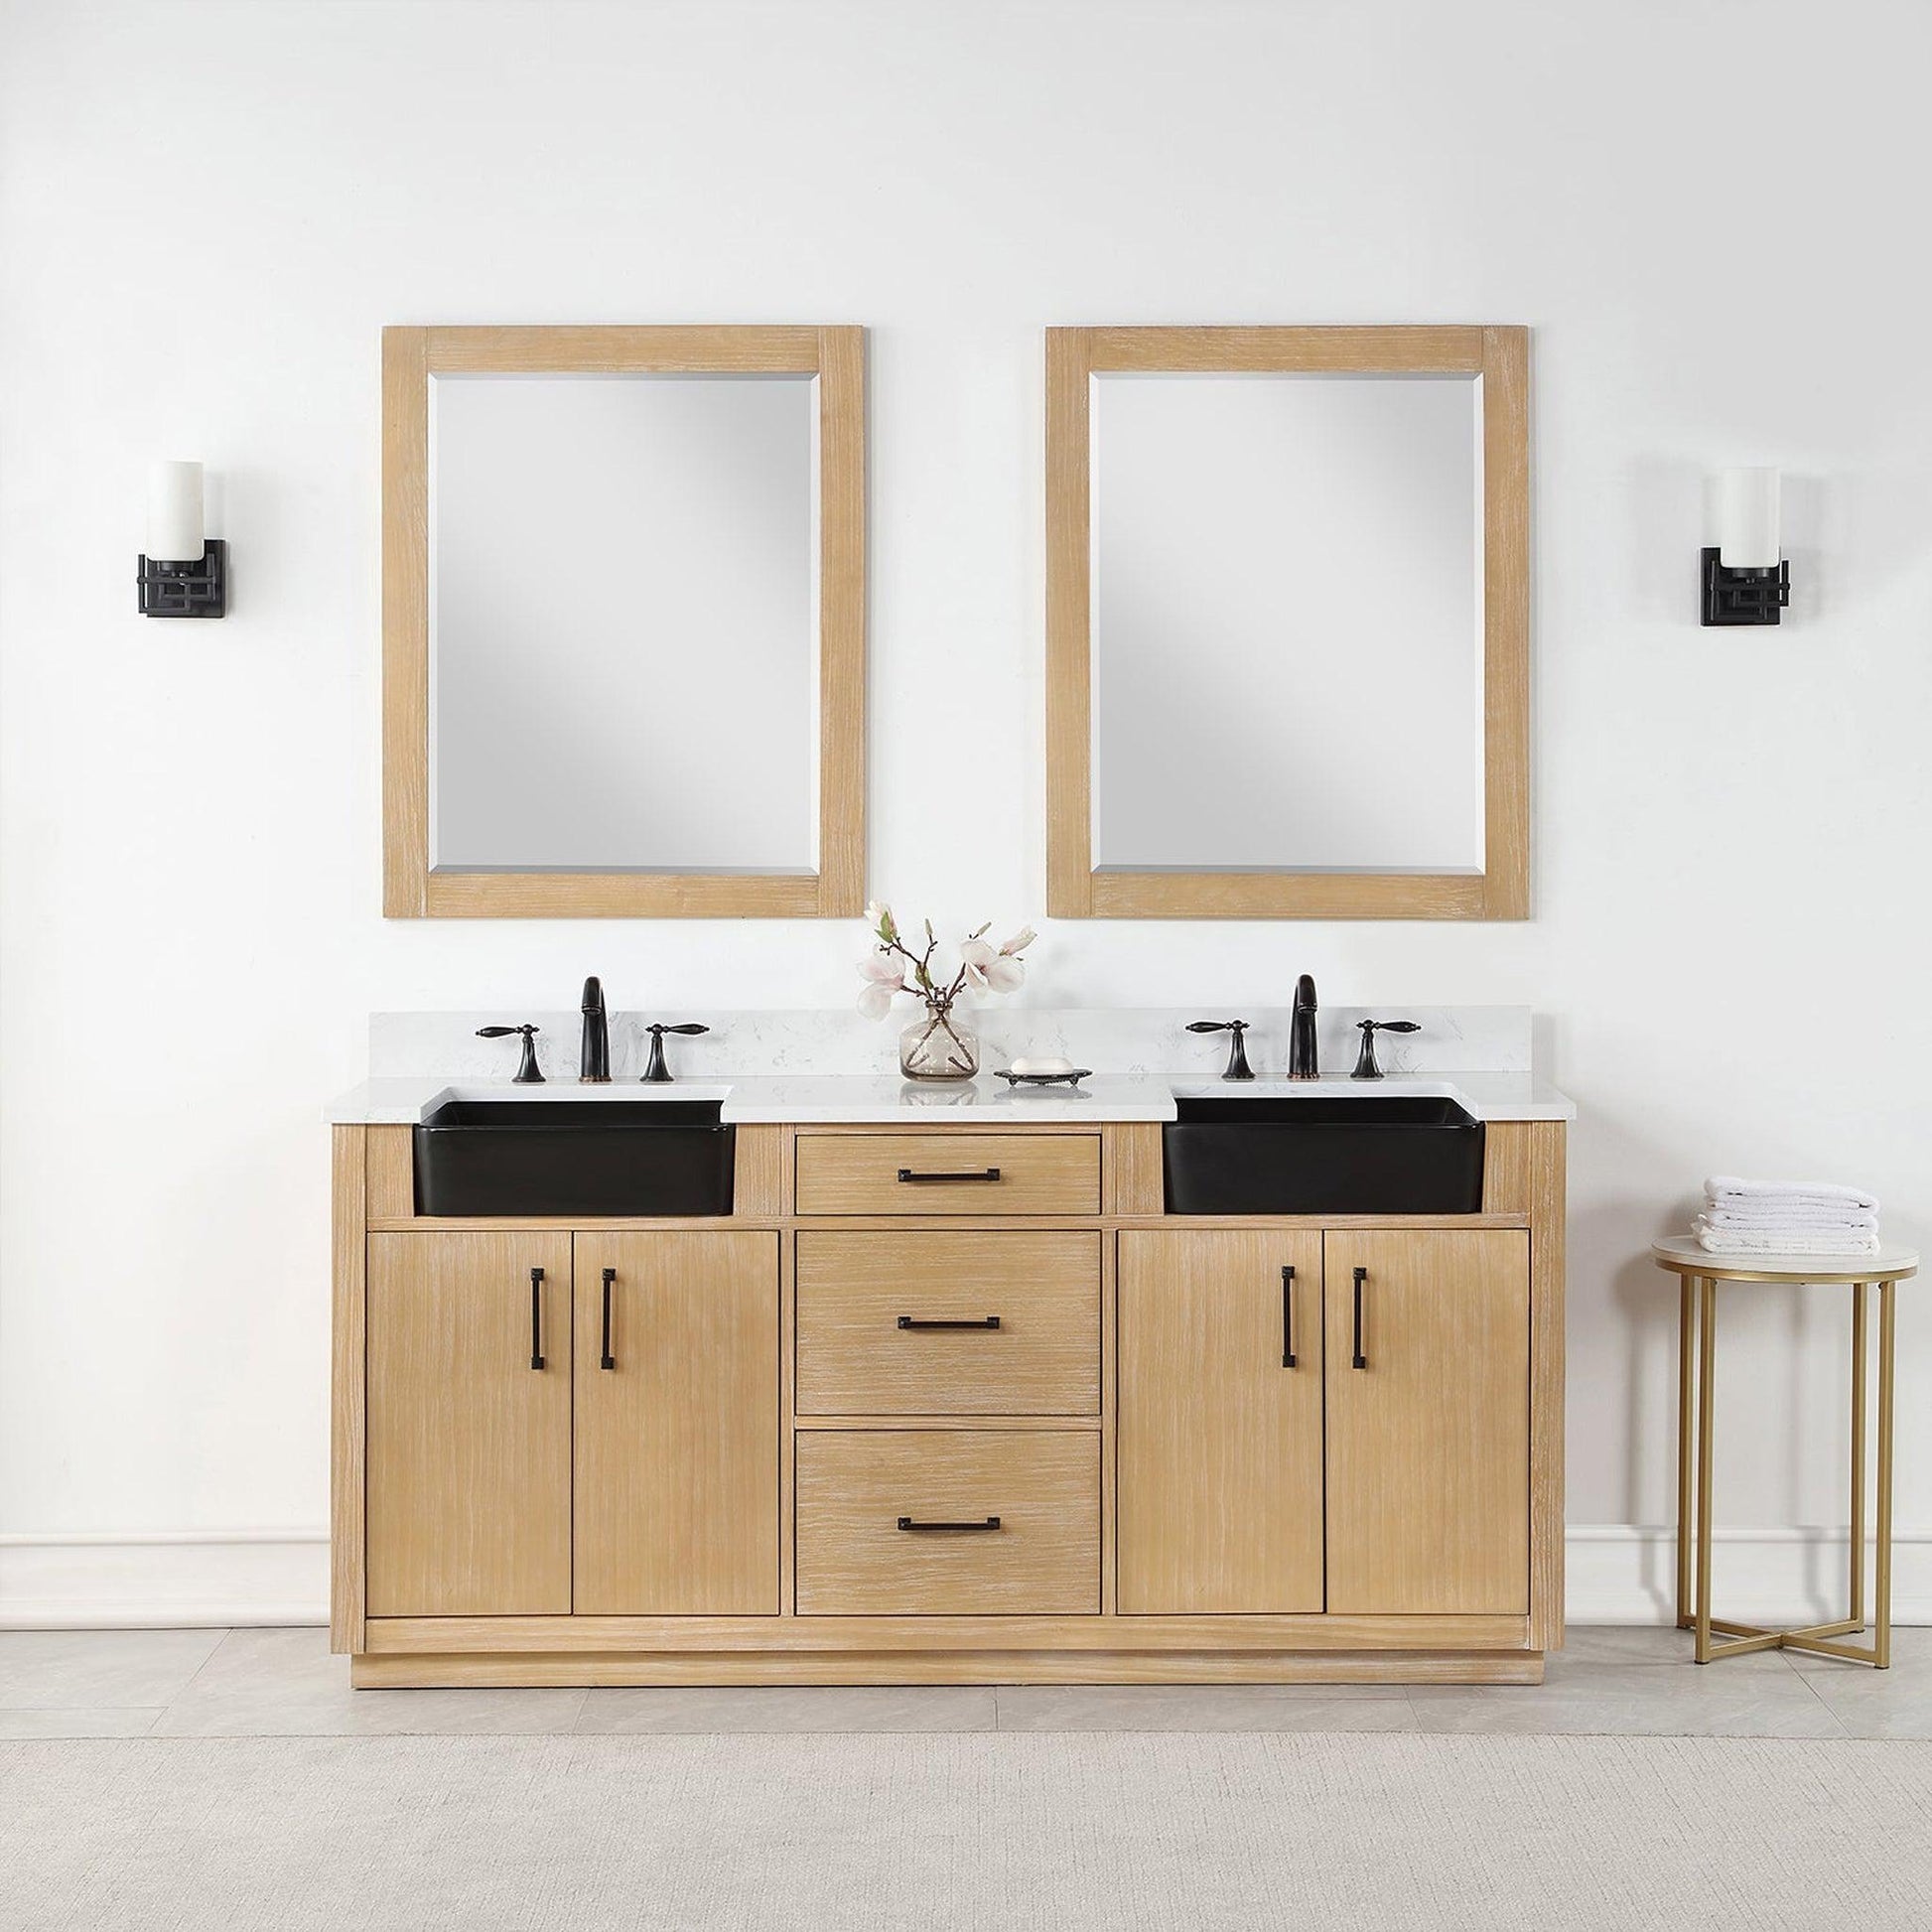 Altair Novago 72" Weathered Pine Freestanding Double Bathroom Vanity Set With Mirror, Aosta White Composite Stone Top, Double Rectangular Drop-In Black Farmhouse Ceramic Sinks, Overflow, and Backsplash